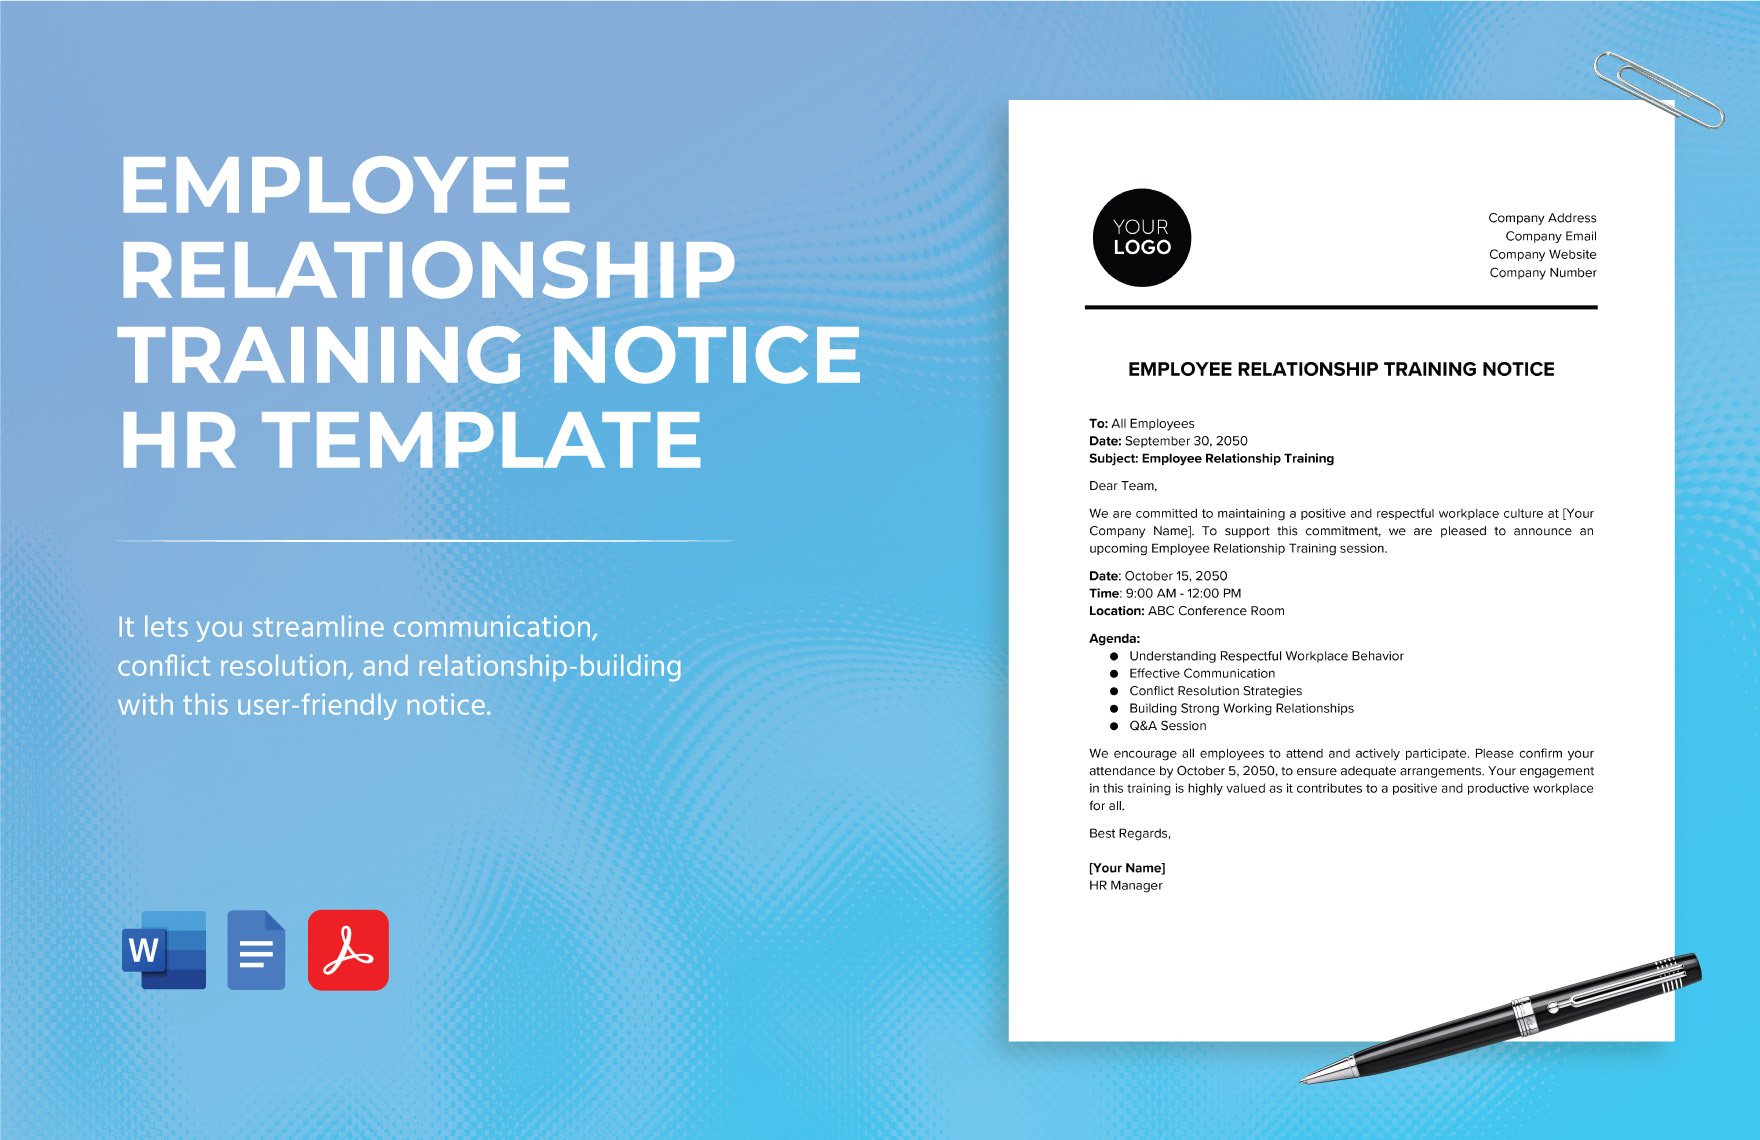 Employee Relationship Training Notice HR Template